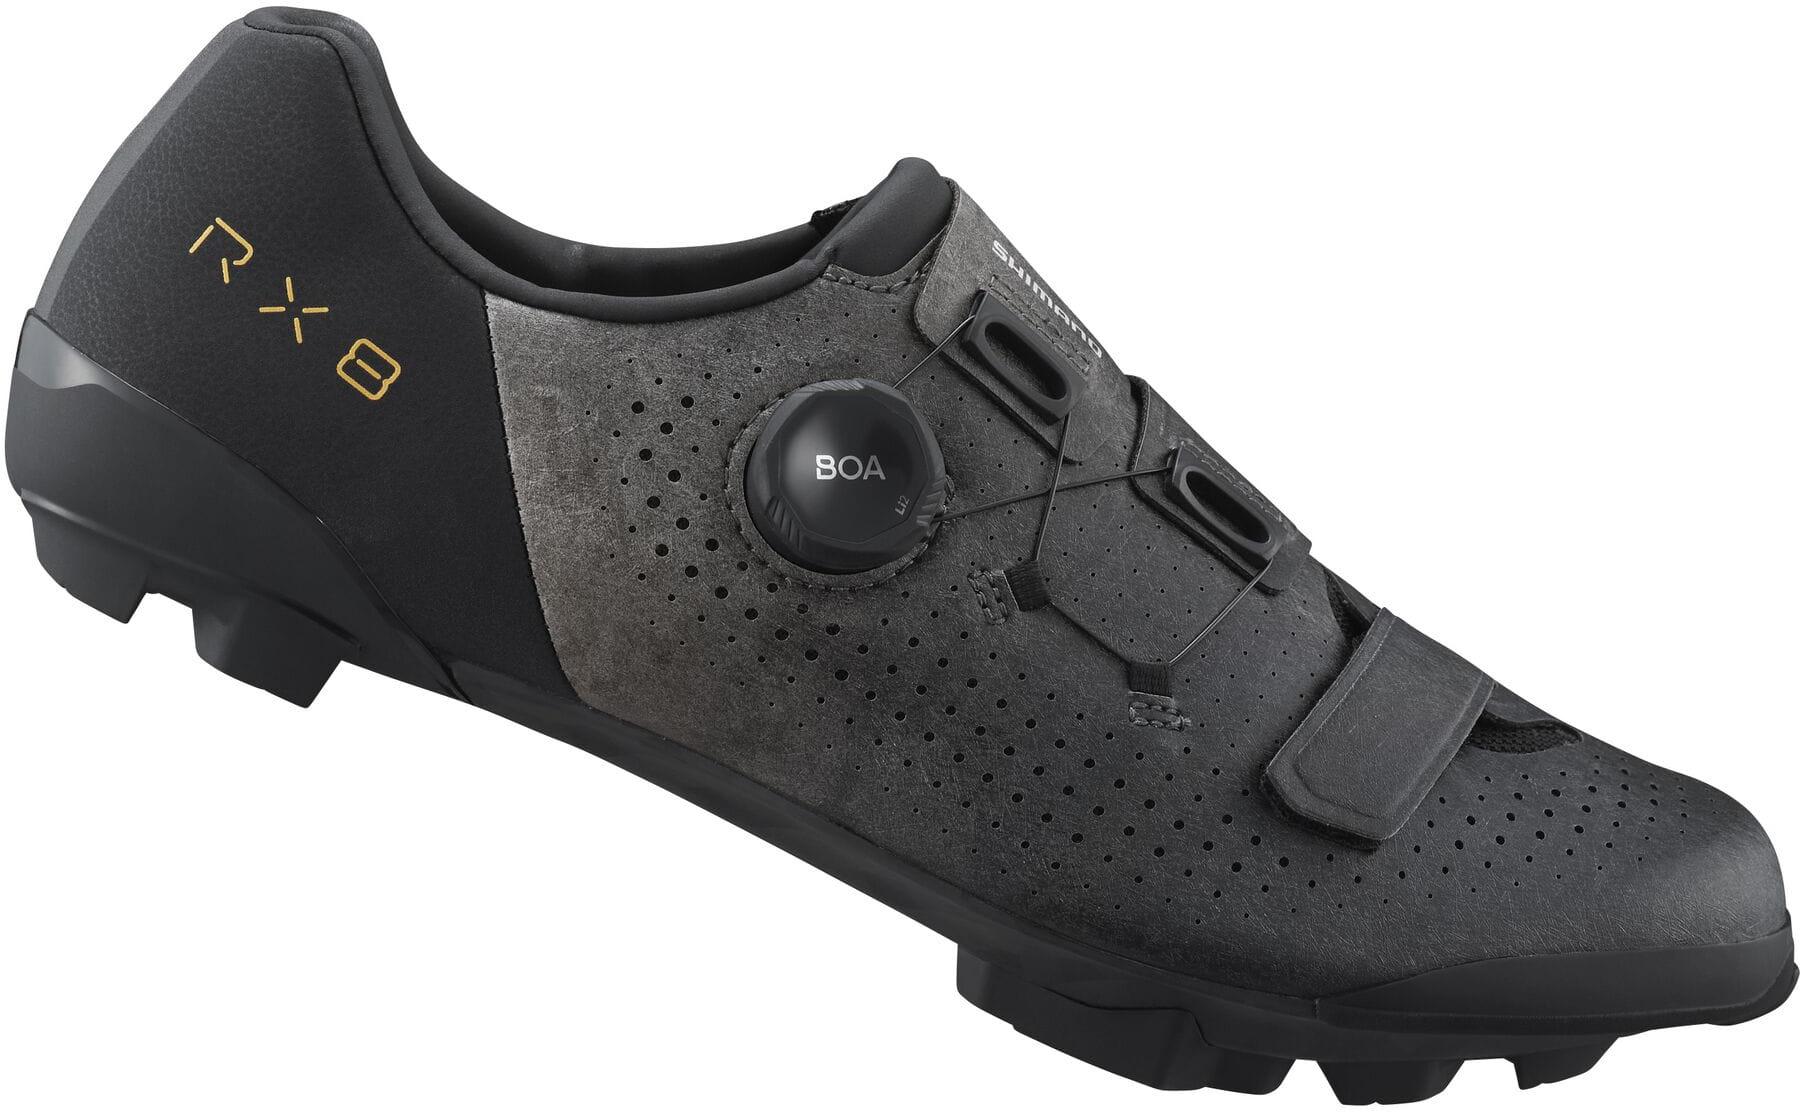 Shimano Rx801 Spd Shoes - Black